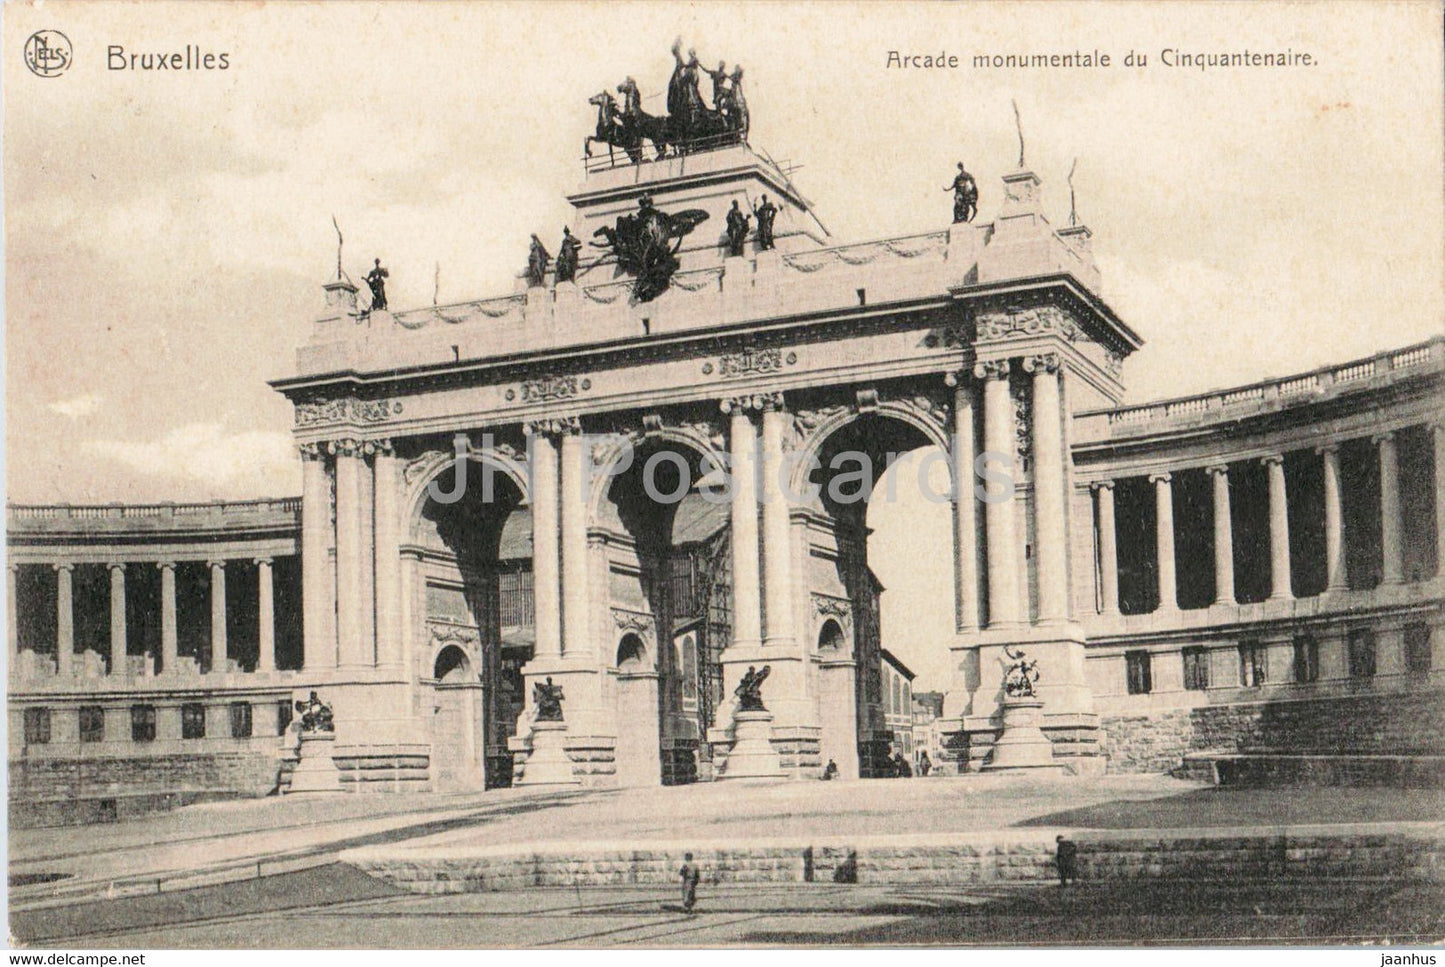 Bruxelles - Brussels - Arcade monumentale du Cinquantenaire - 289 - old postcard - 1909 - Belgium - used - JH Postcards